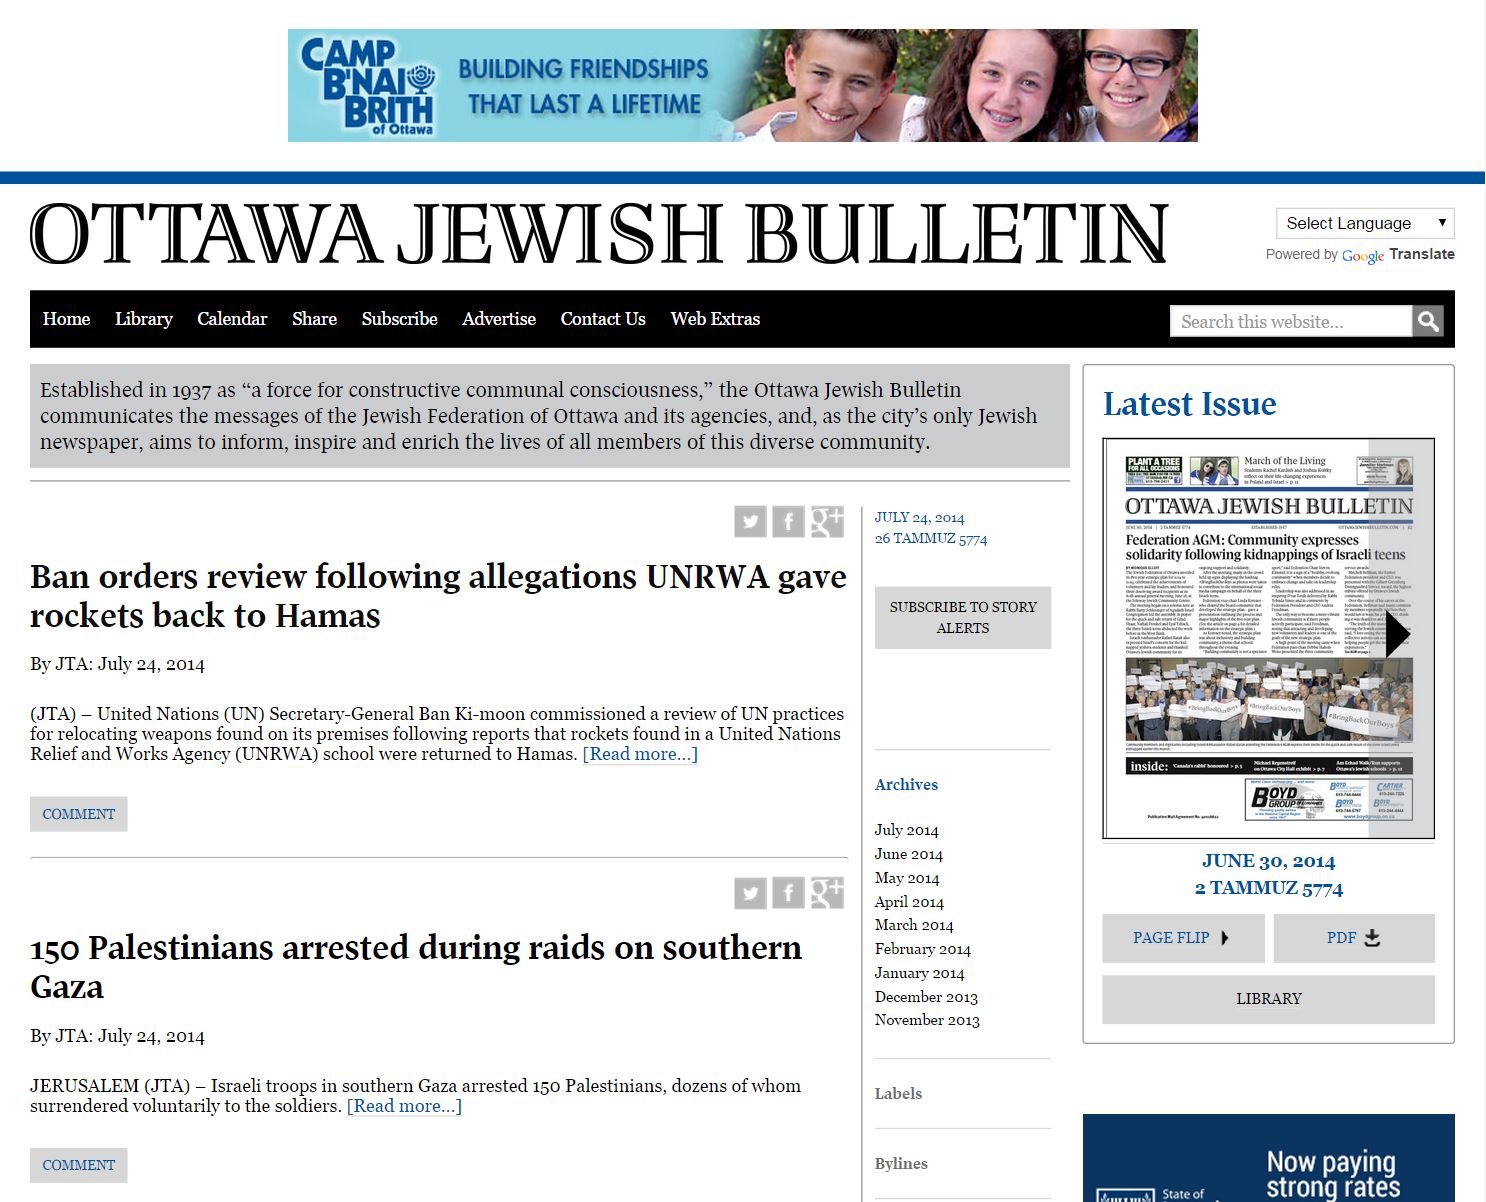 Image of Ottawa Jewish Bulletin web site: Homepage